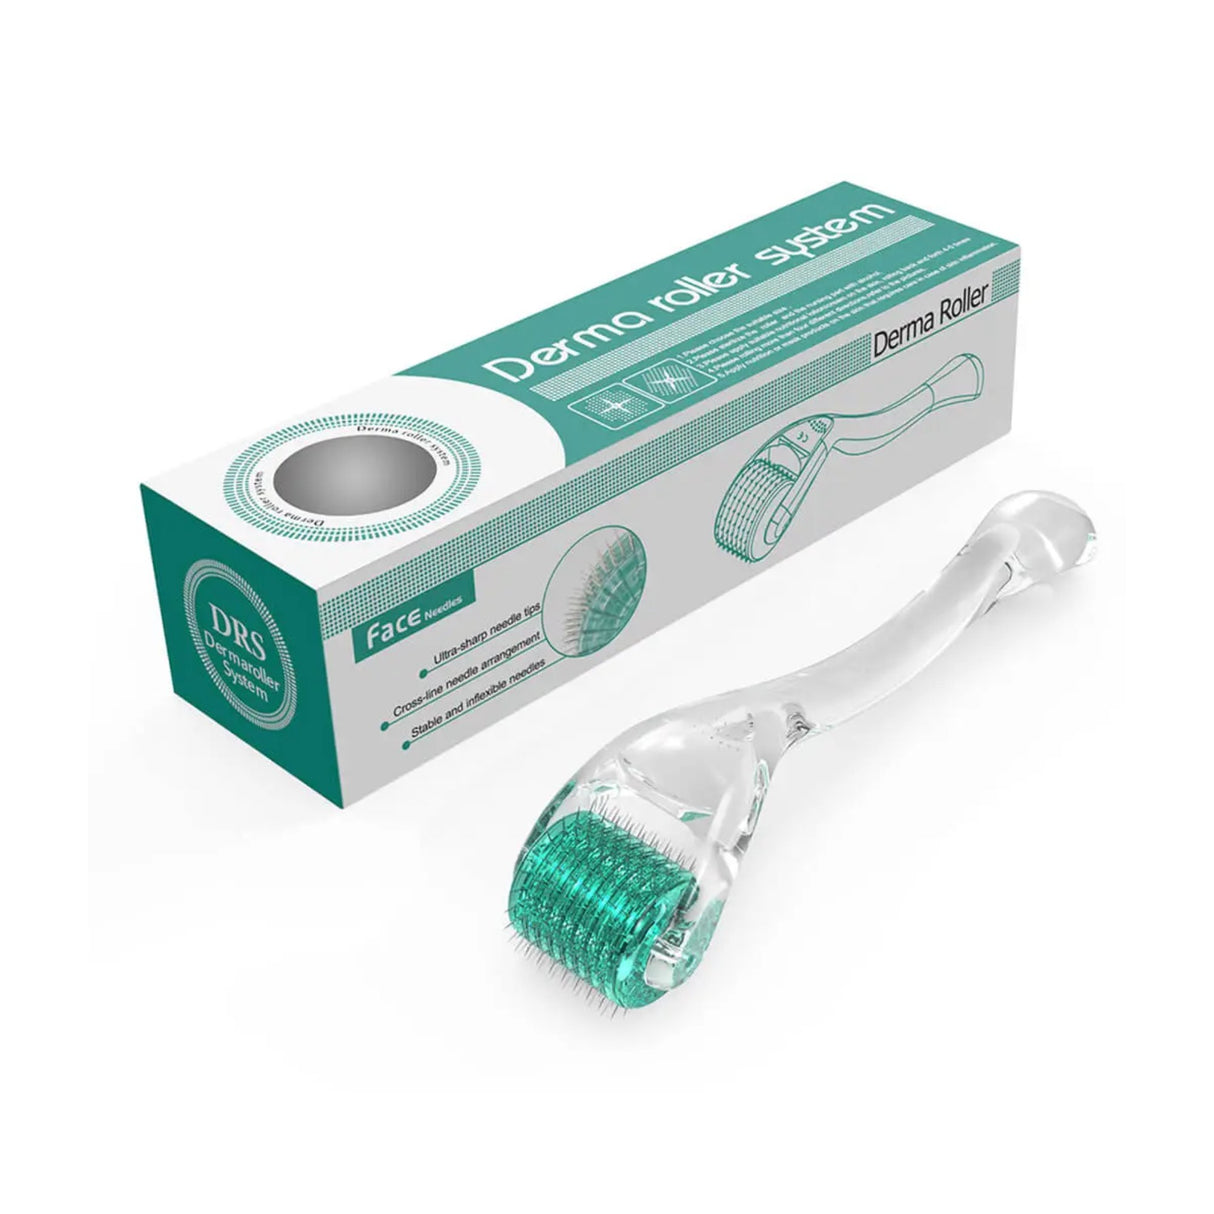 Derma Roller 192 Microneedles - Filler Lux™ - Medical Device - Filler Lux